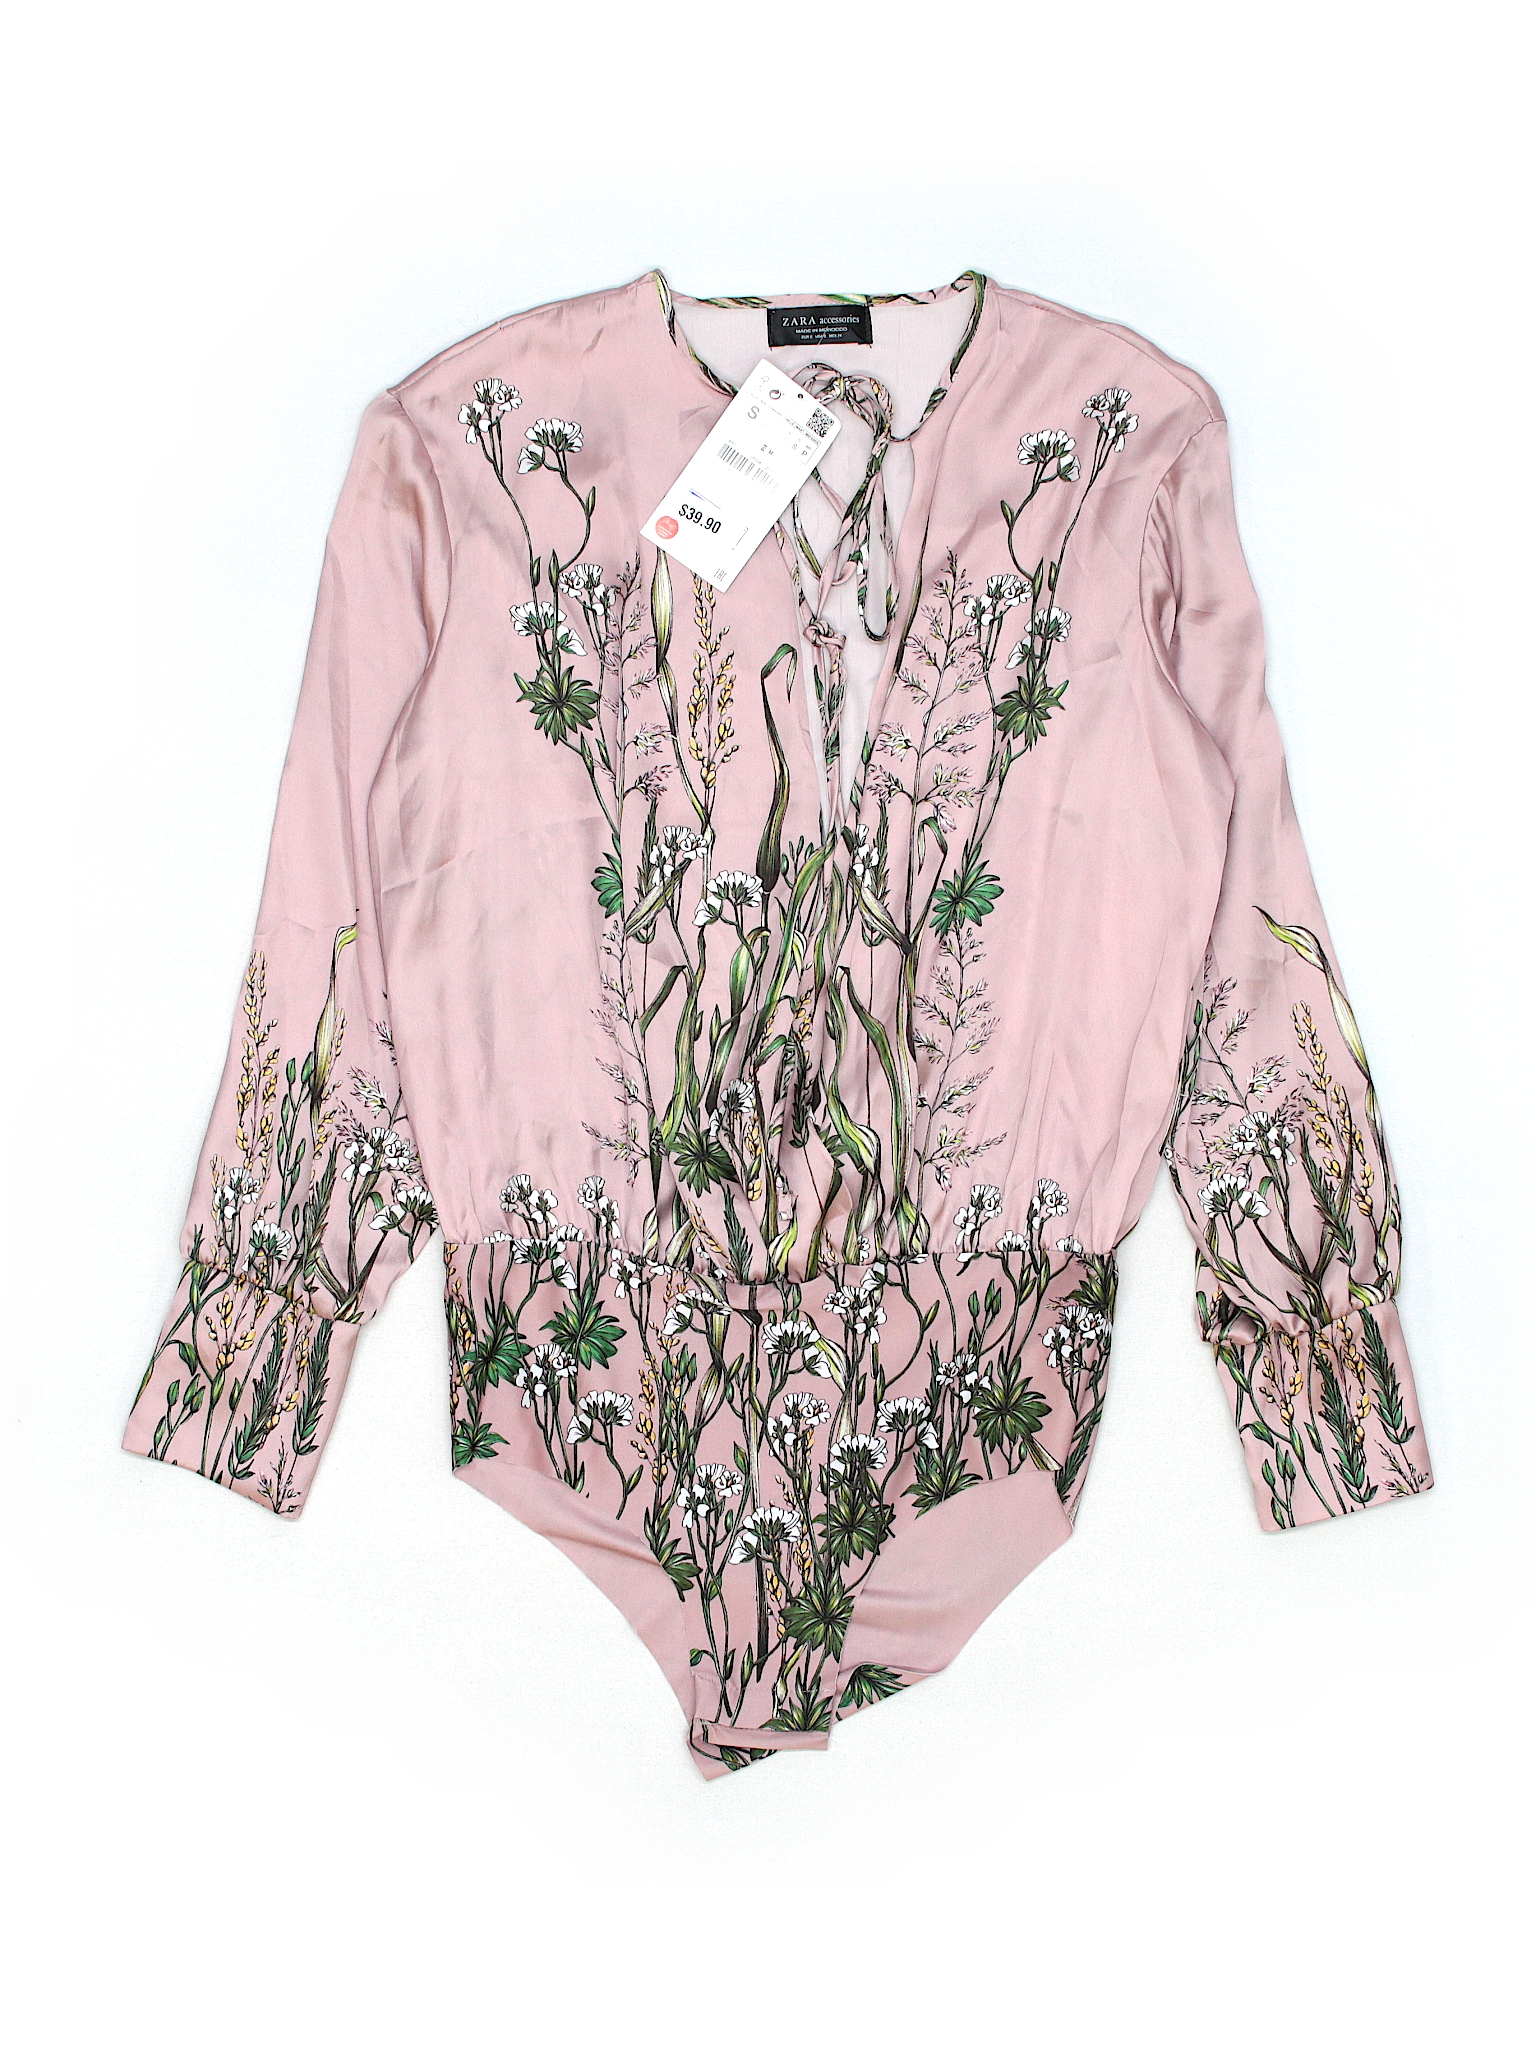 Zara 100% Polyester Floral Light Pink Long Sleeve Blouse Size S - 74% ...